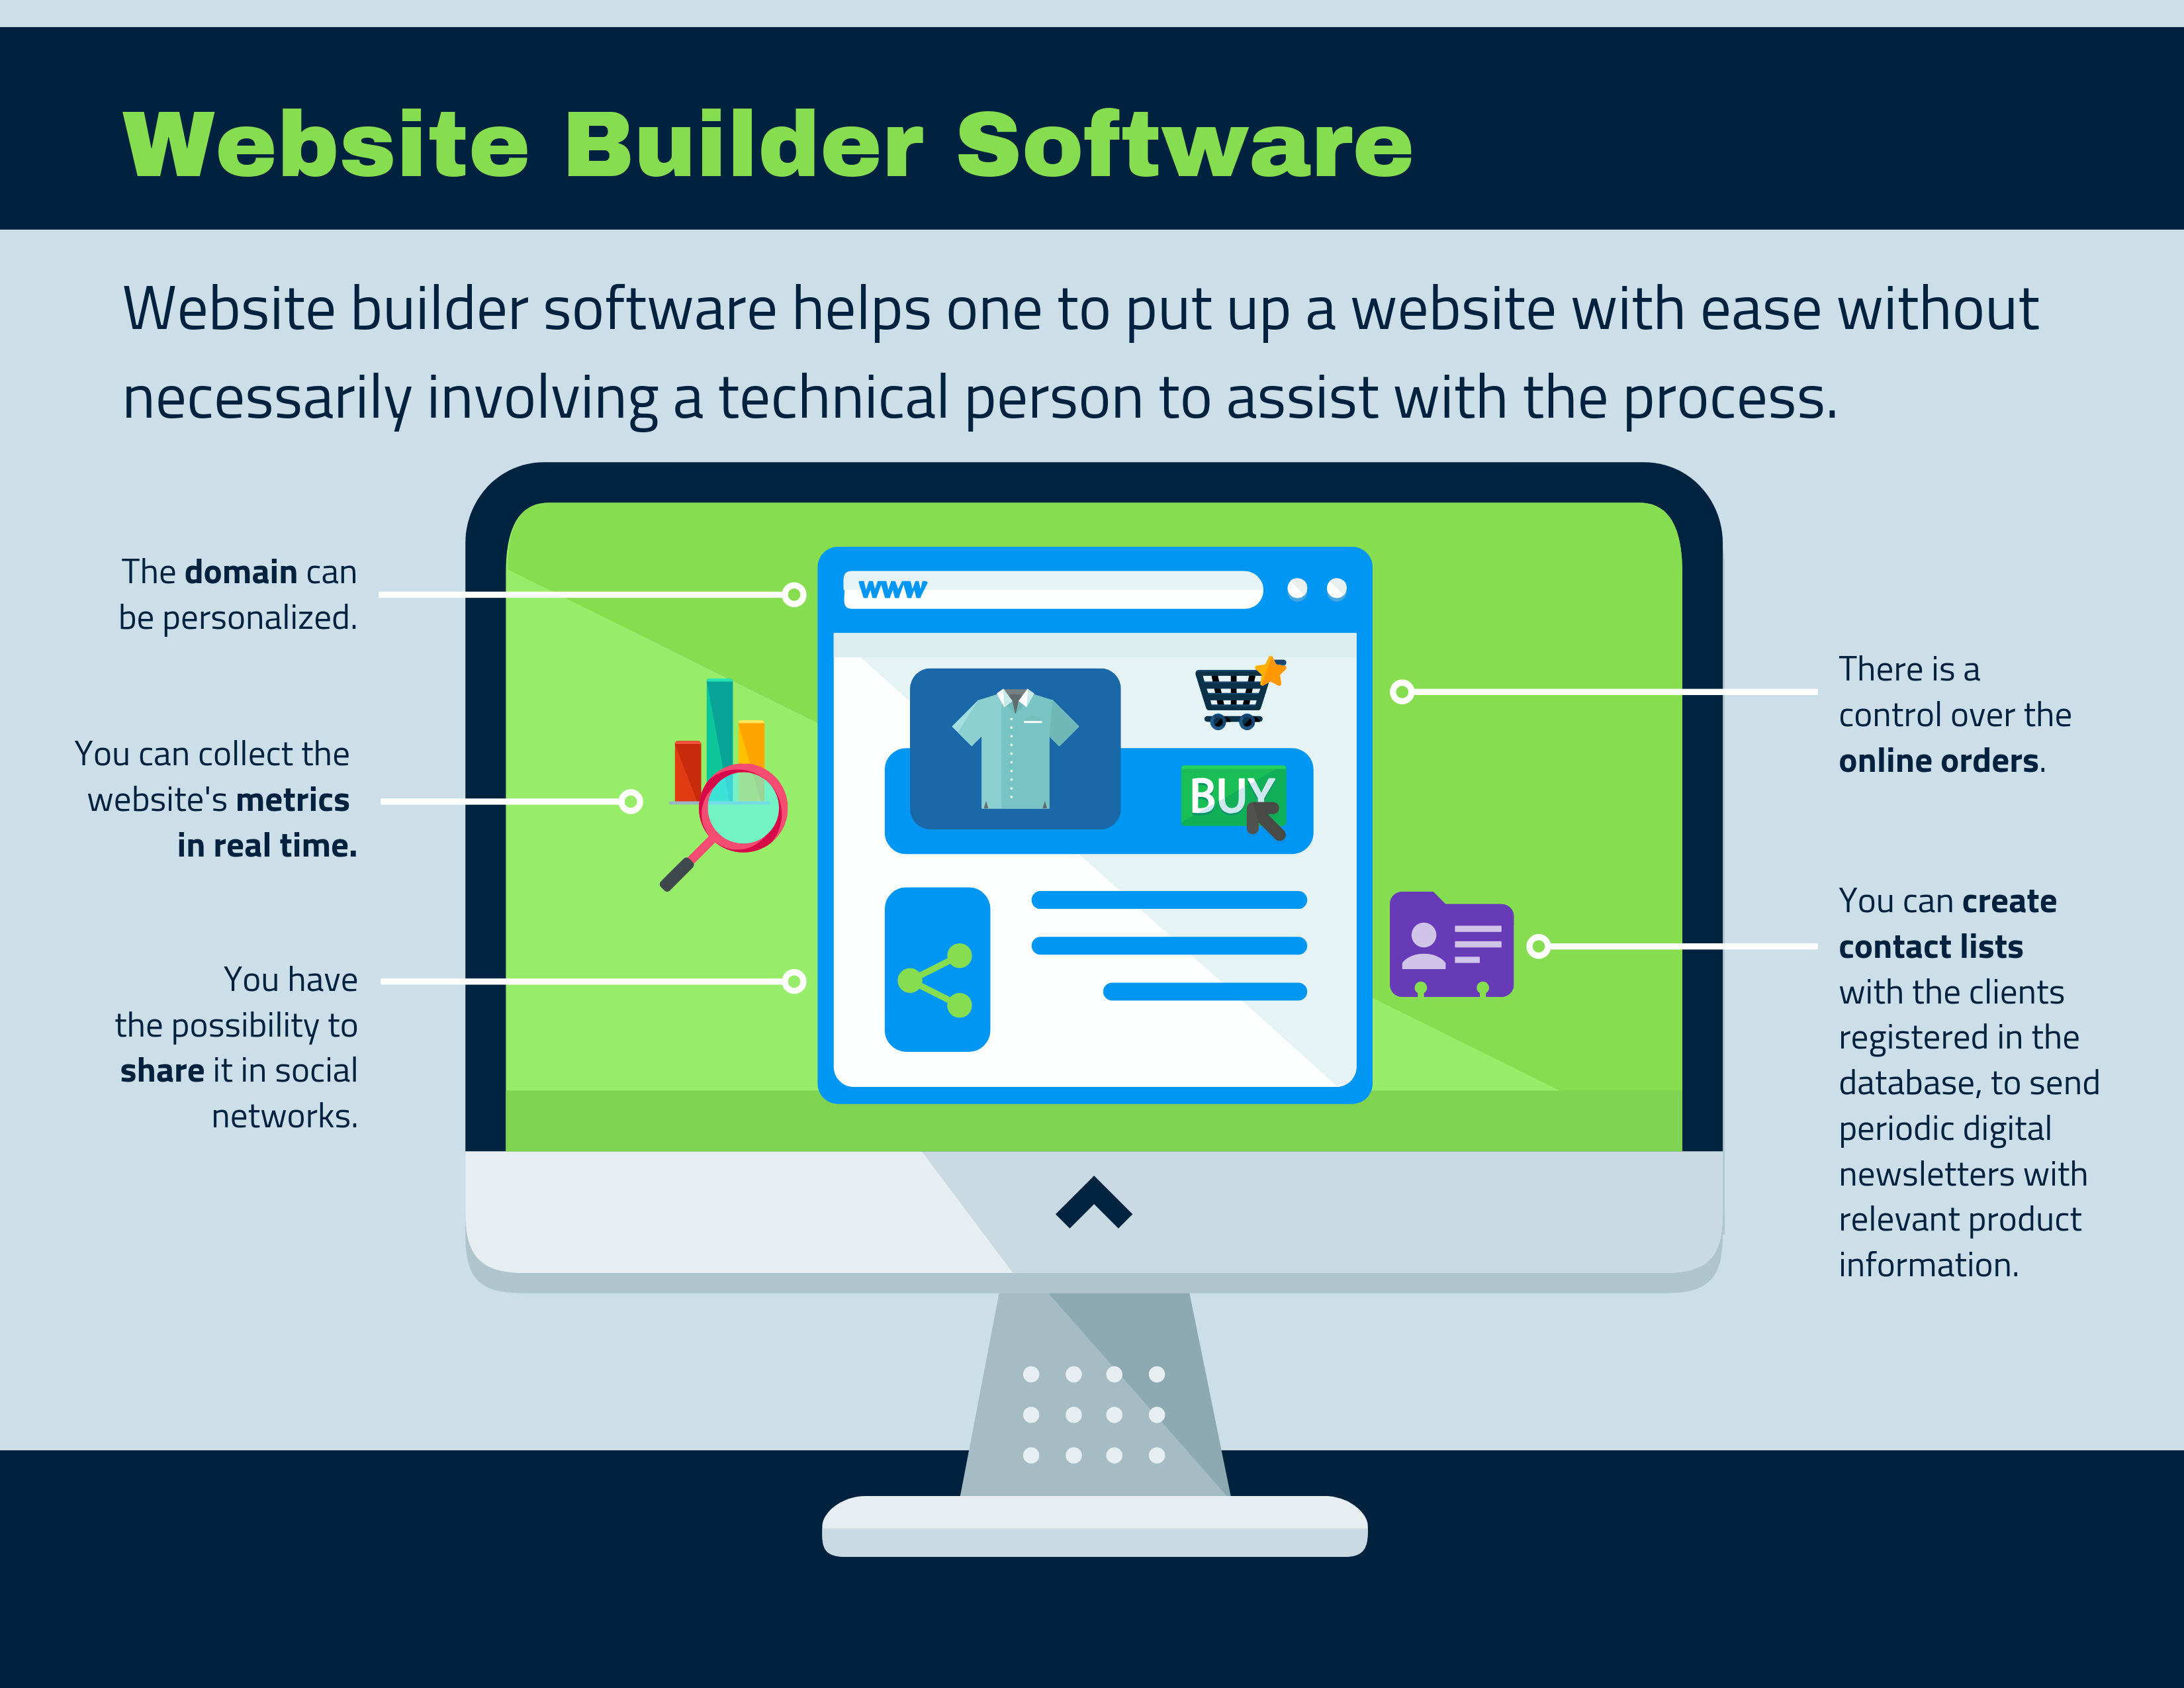 Principal criterias of the best website builder software